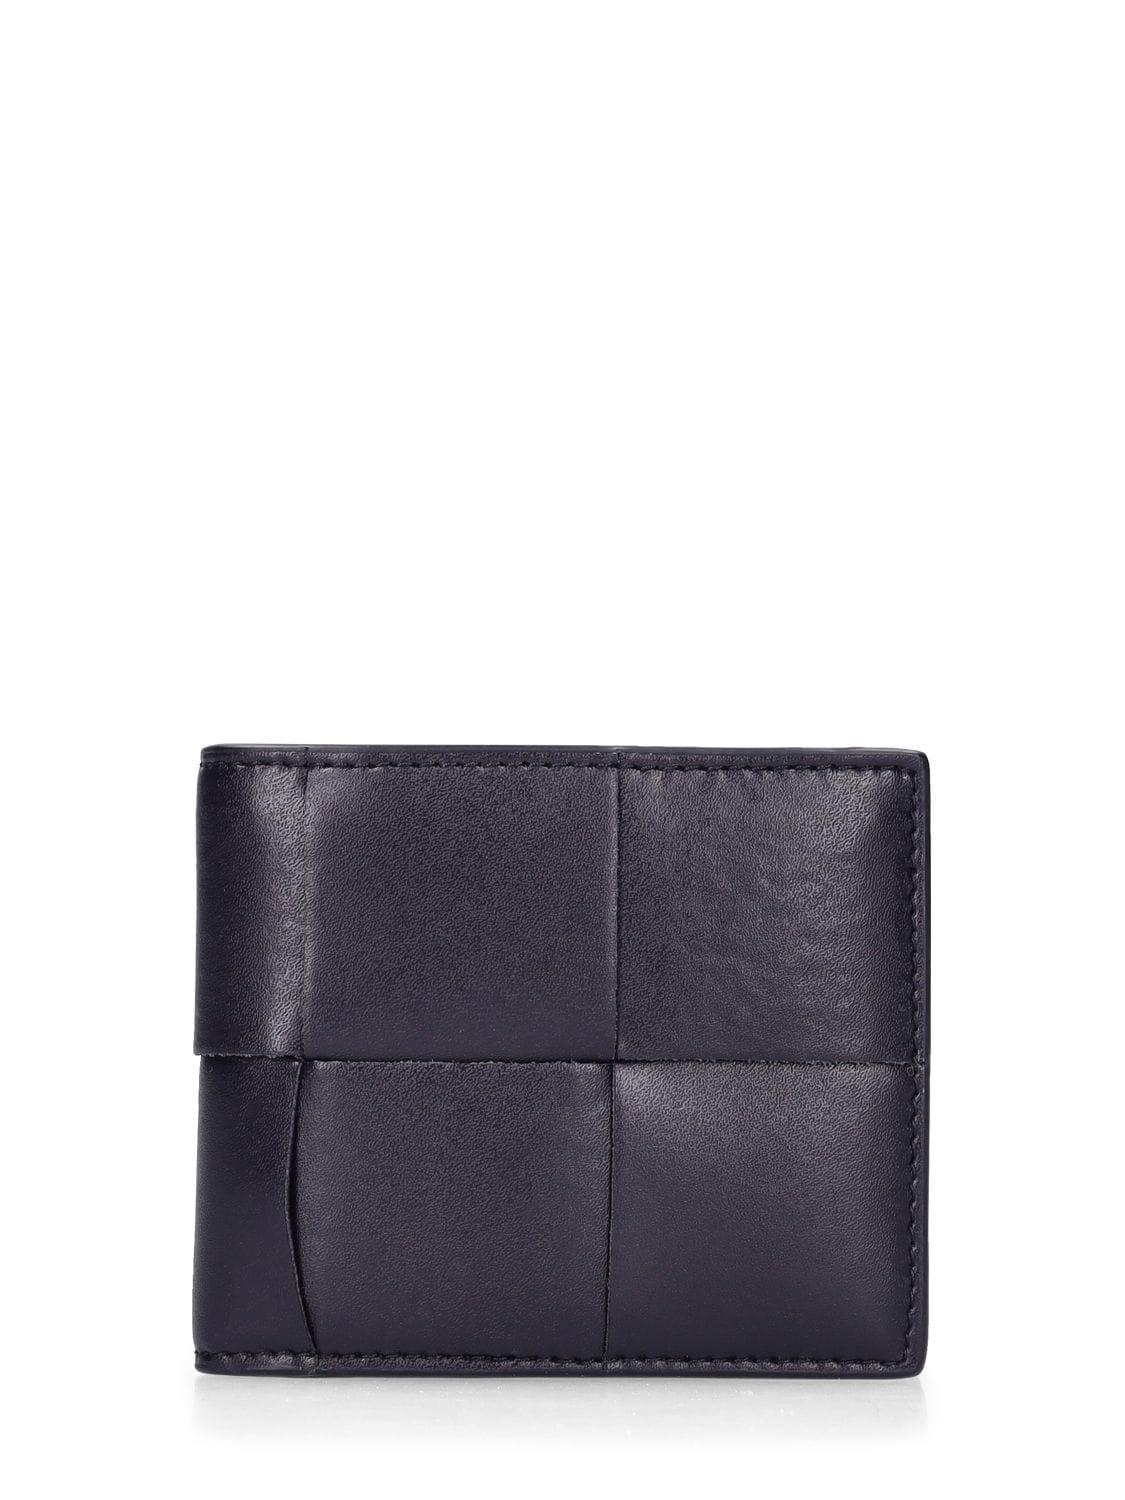 Bottega Veneta Maxi Intreccio Leather Billfold Wallet In Space